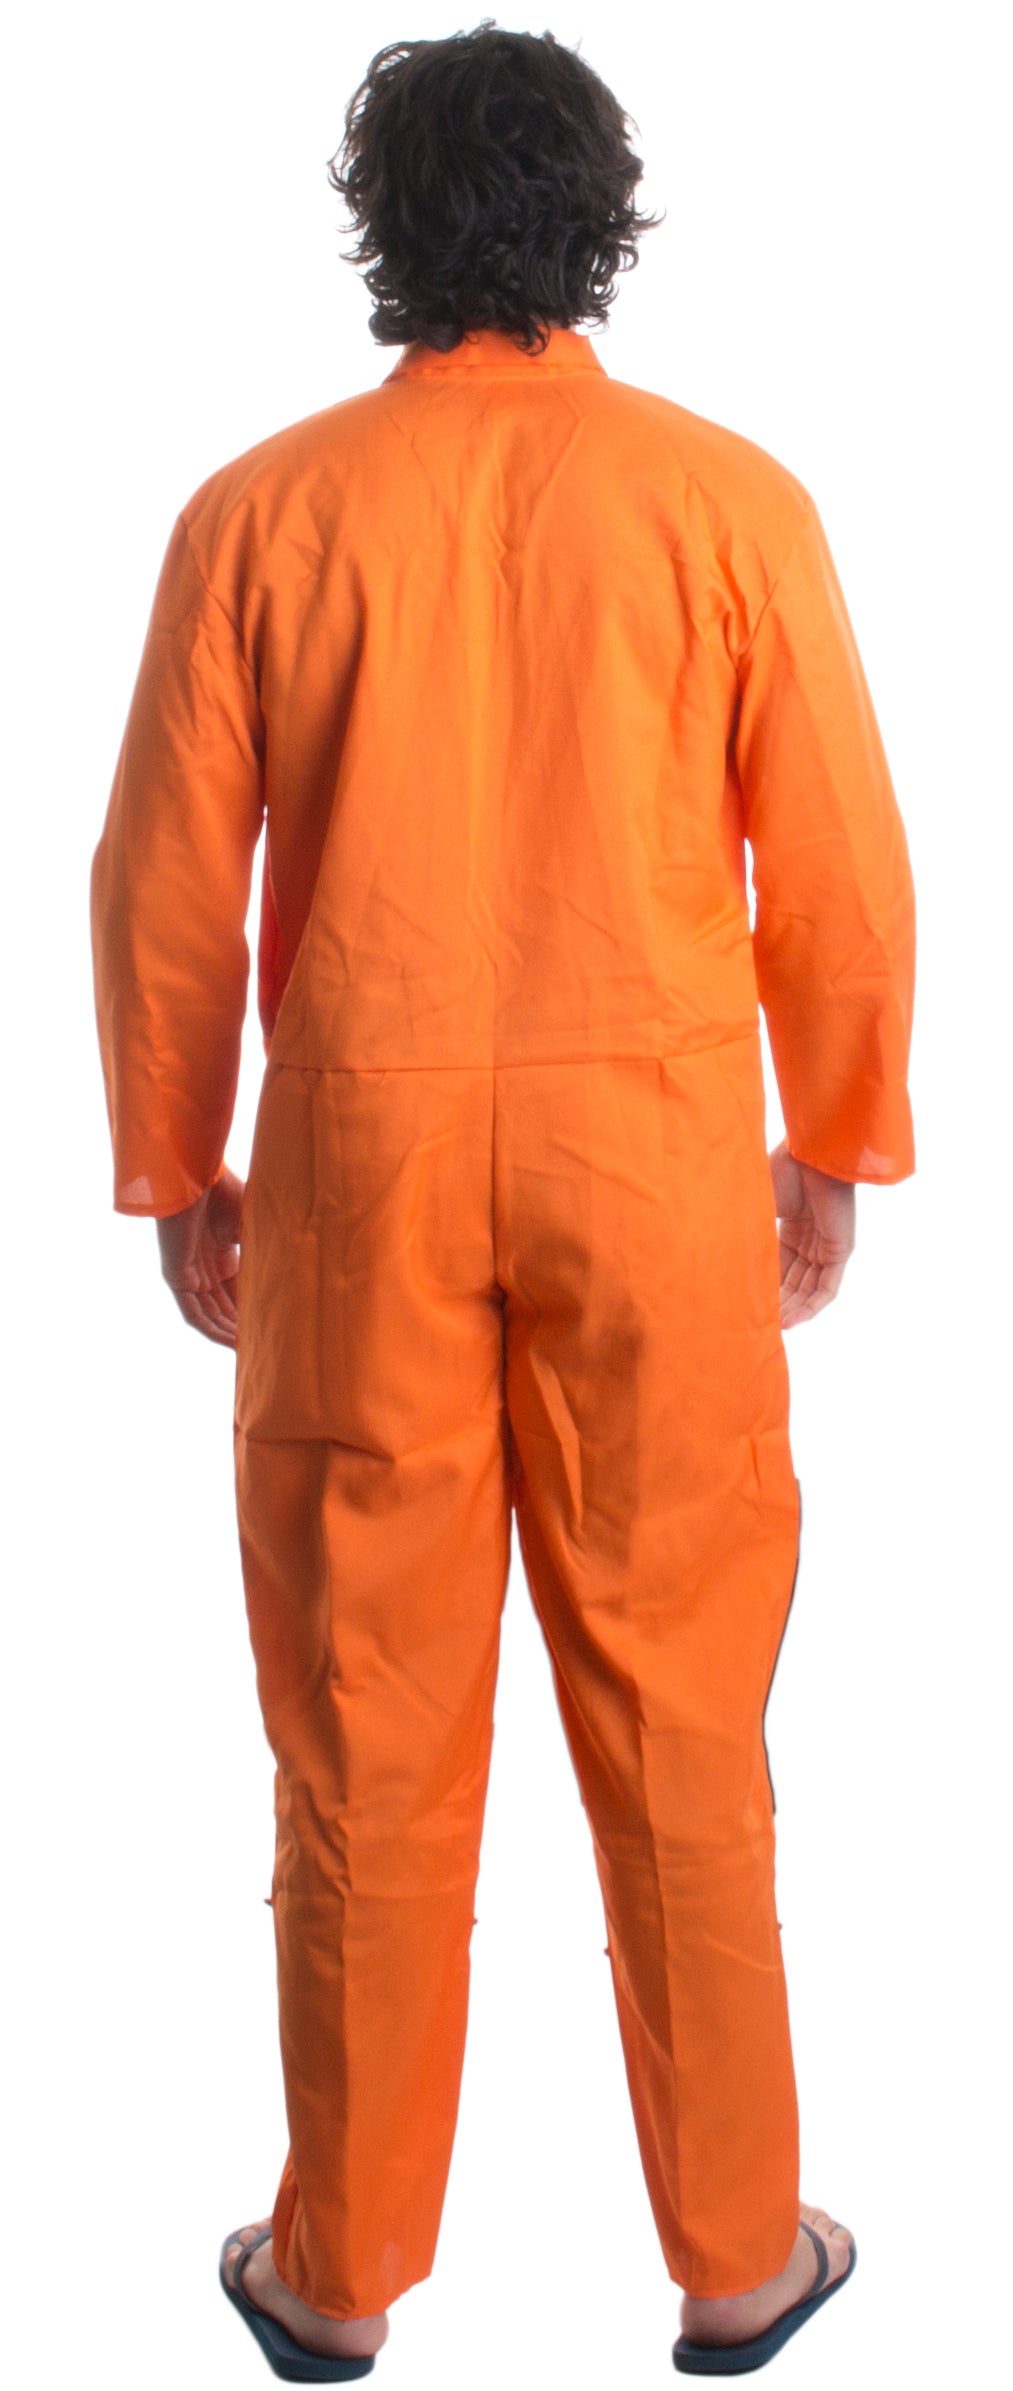 Prisoner Jumpsuit | Orange Prison Inmate Halloween Costume Unisex Jail Criminal